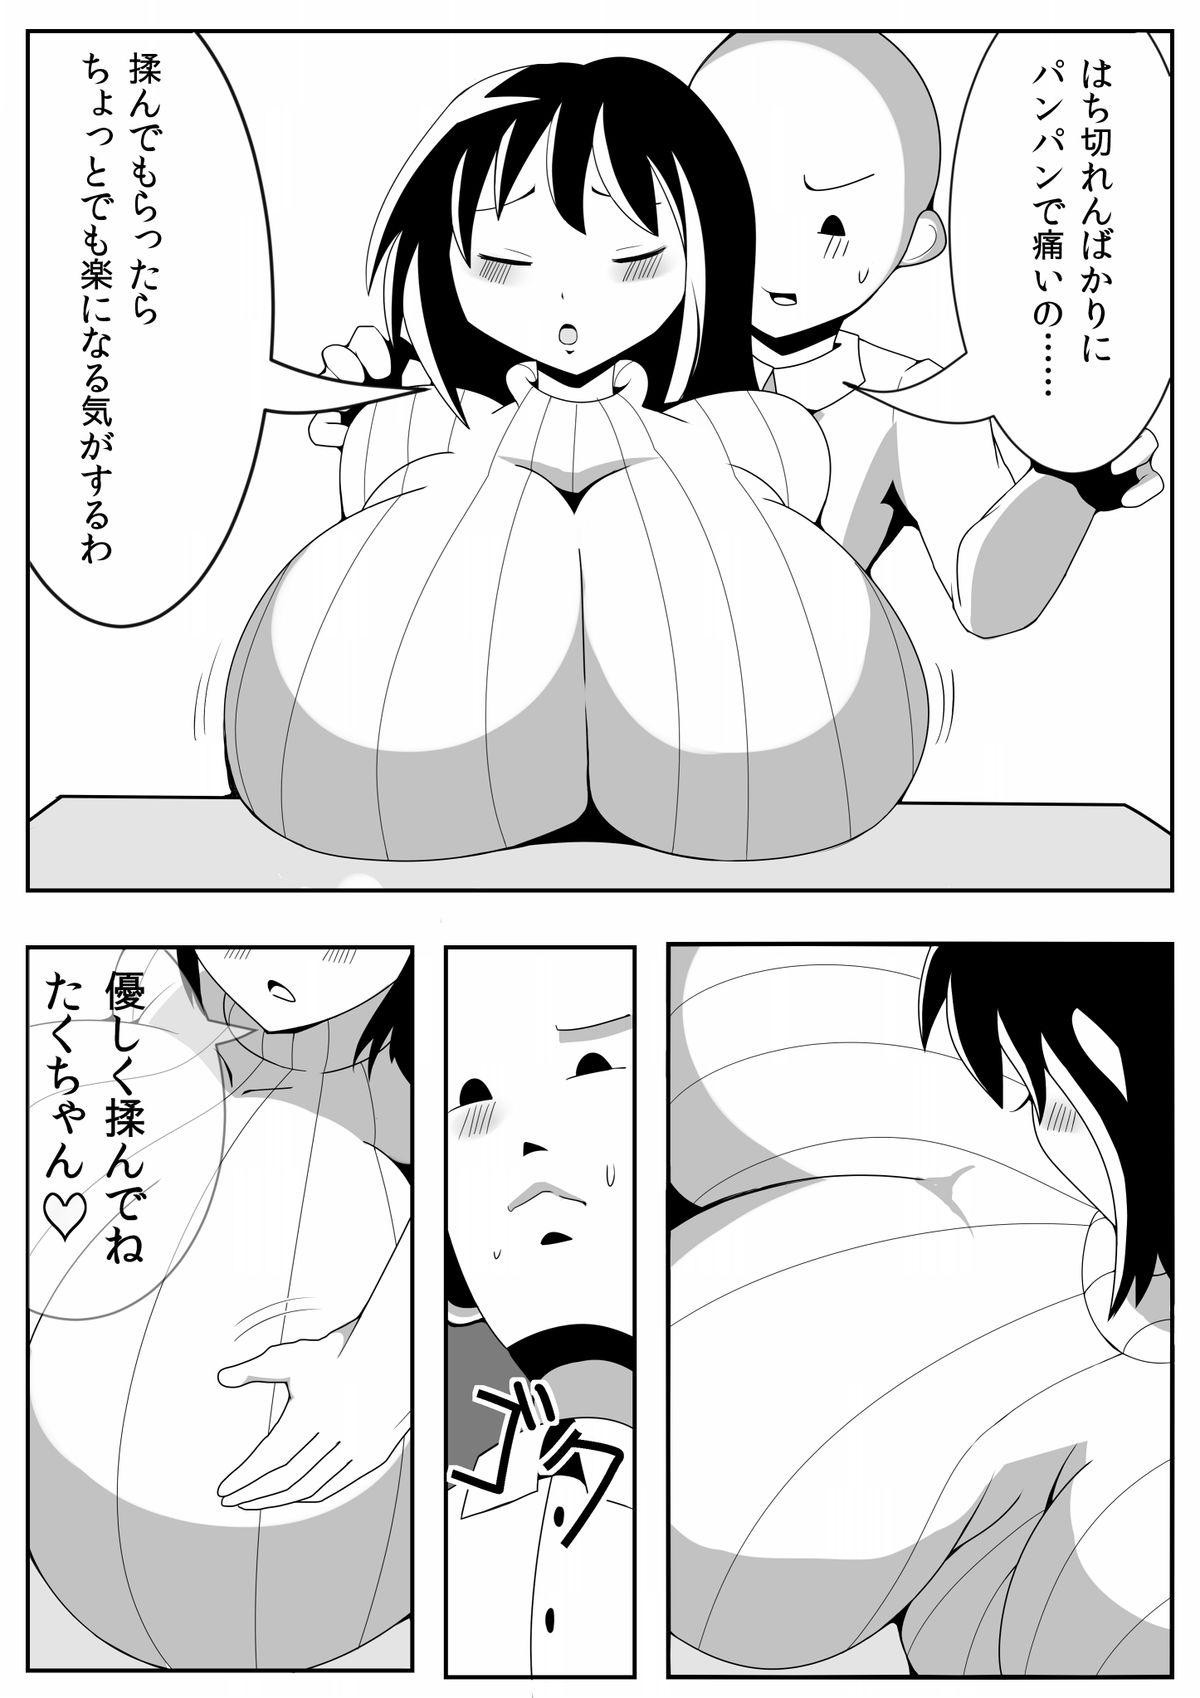 All Asaokitara Oppai Konnani ga Okkiku Nacchatta High Heels - Page 6